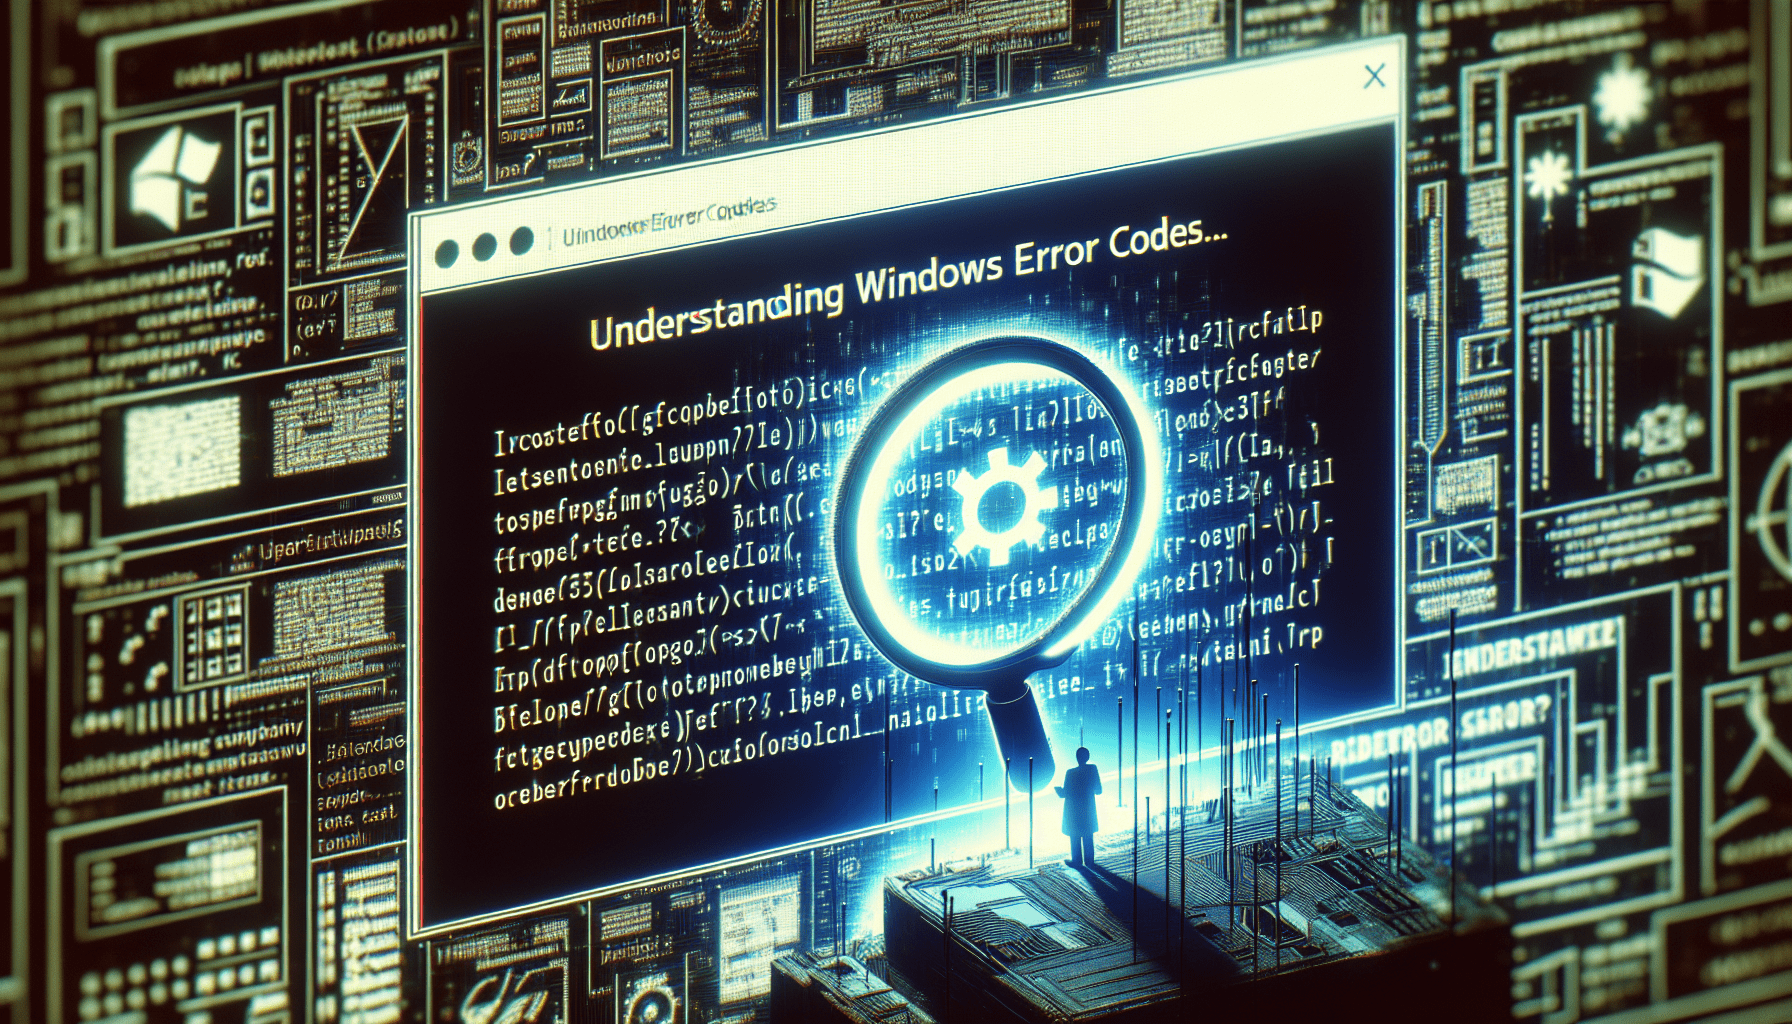 A Guide to Understanding Windows Error Codes